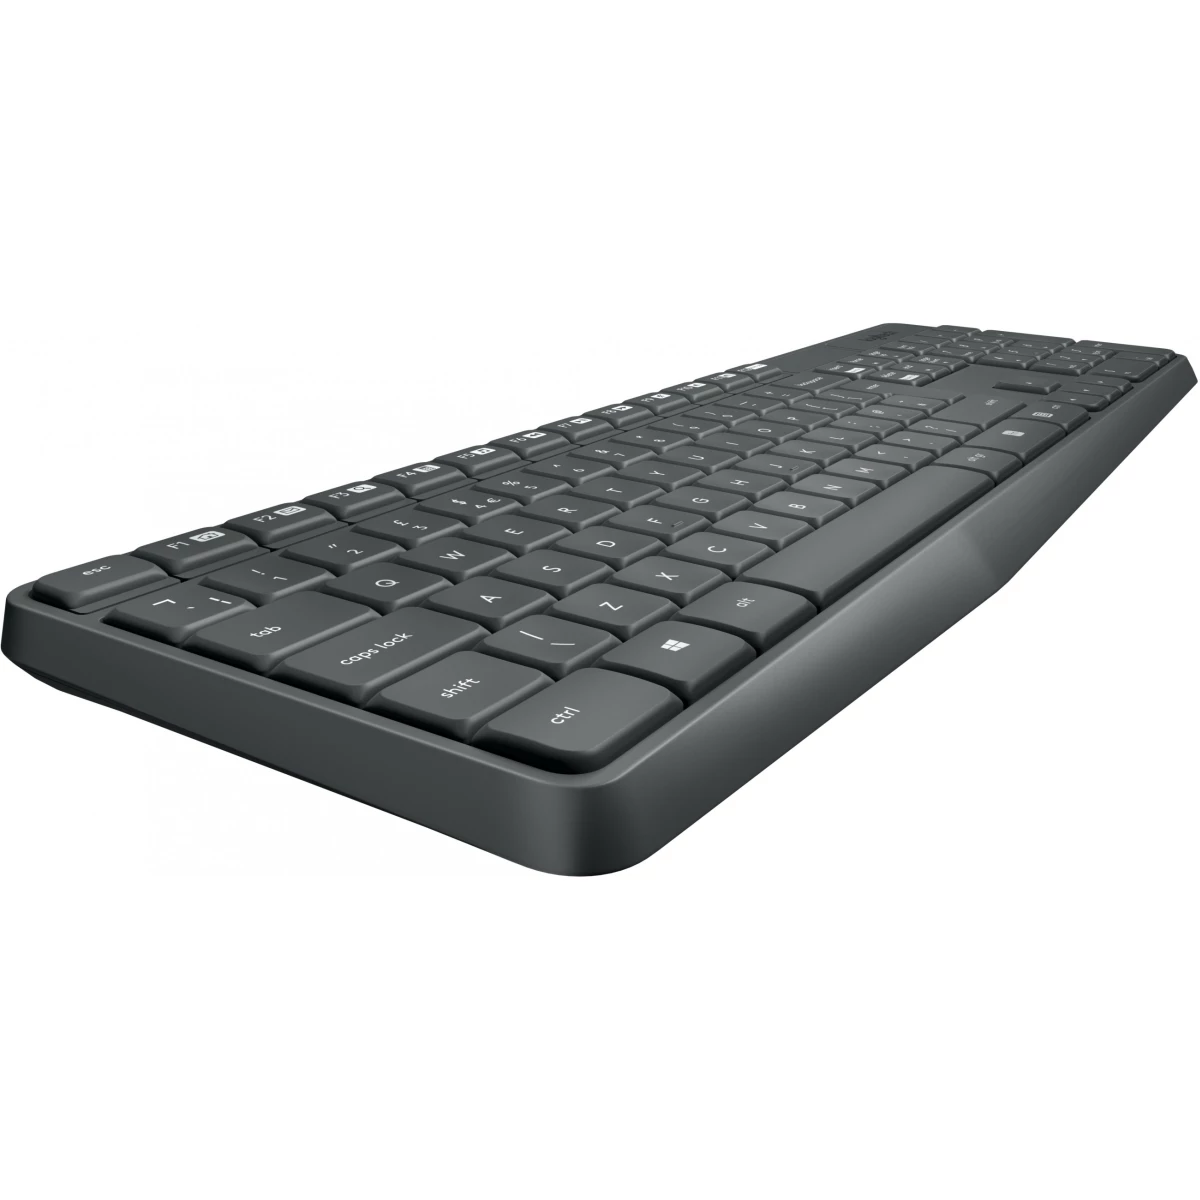 Logitech Wireless Keyboard and Mouse -Grey- MK235